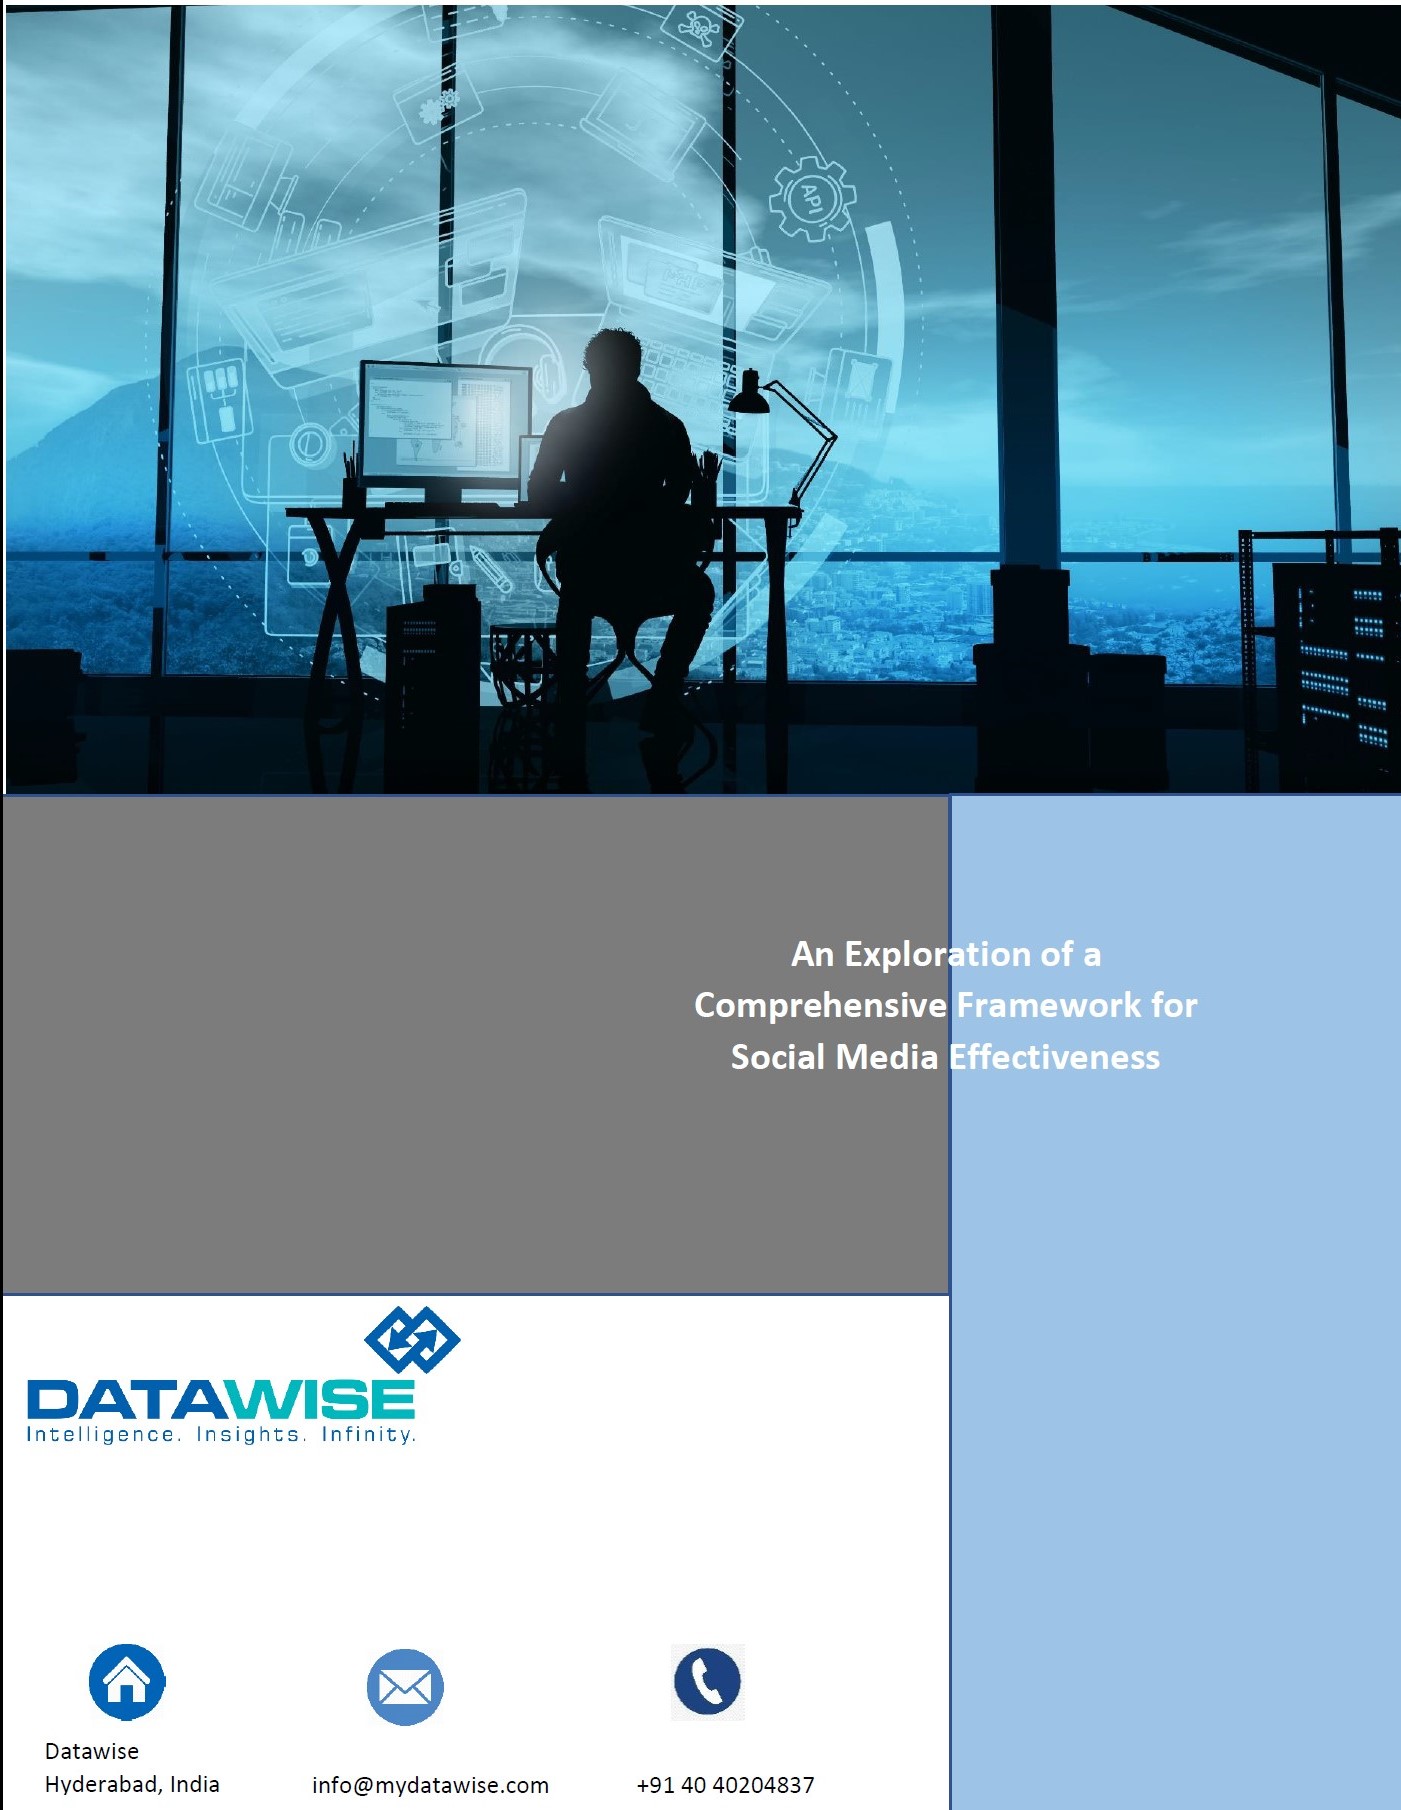 An Exploration of a Comprehensive Framework for Social Media Effectiveness